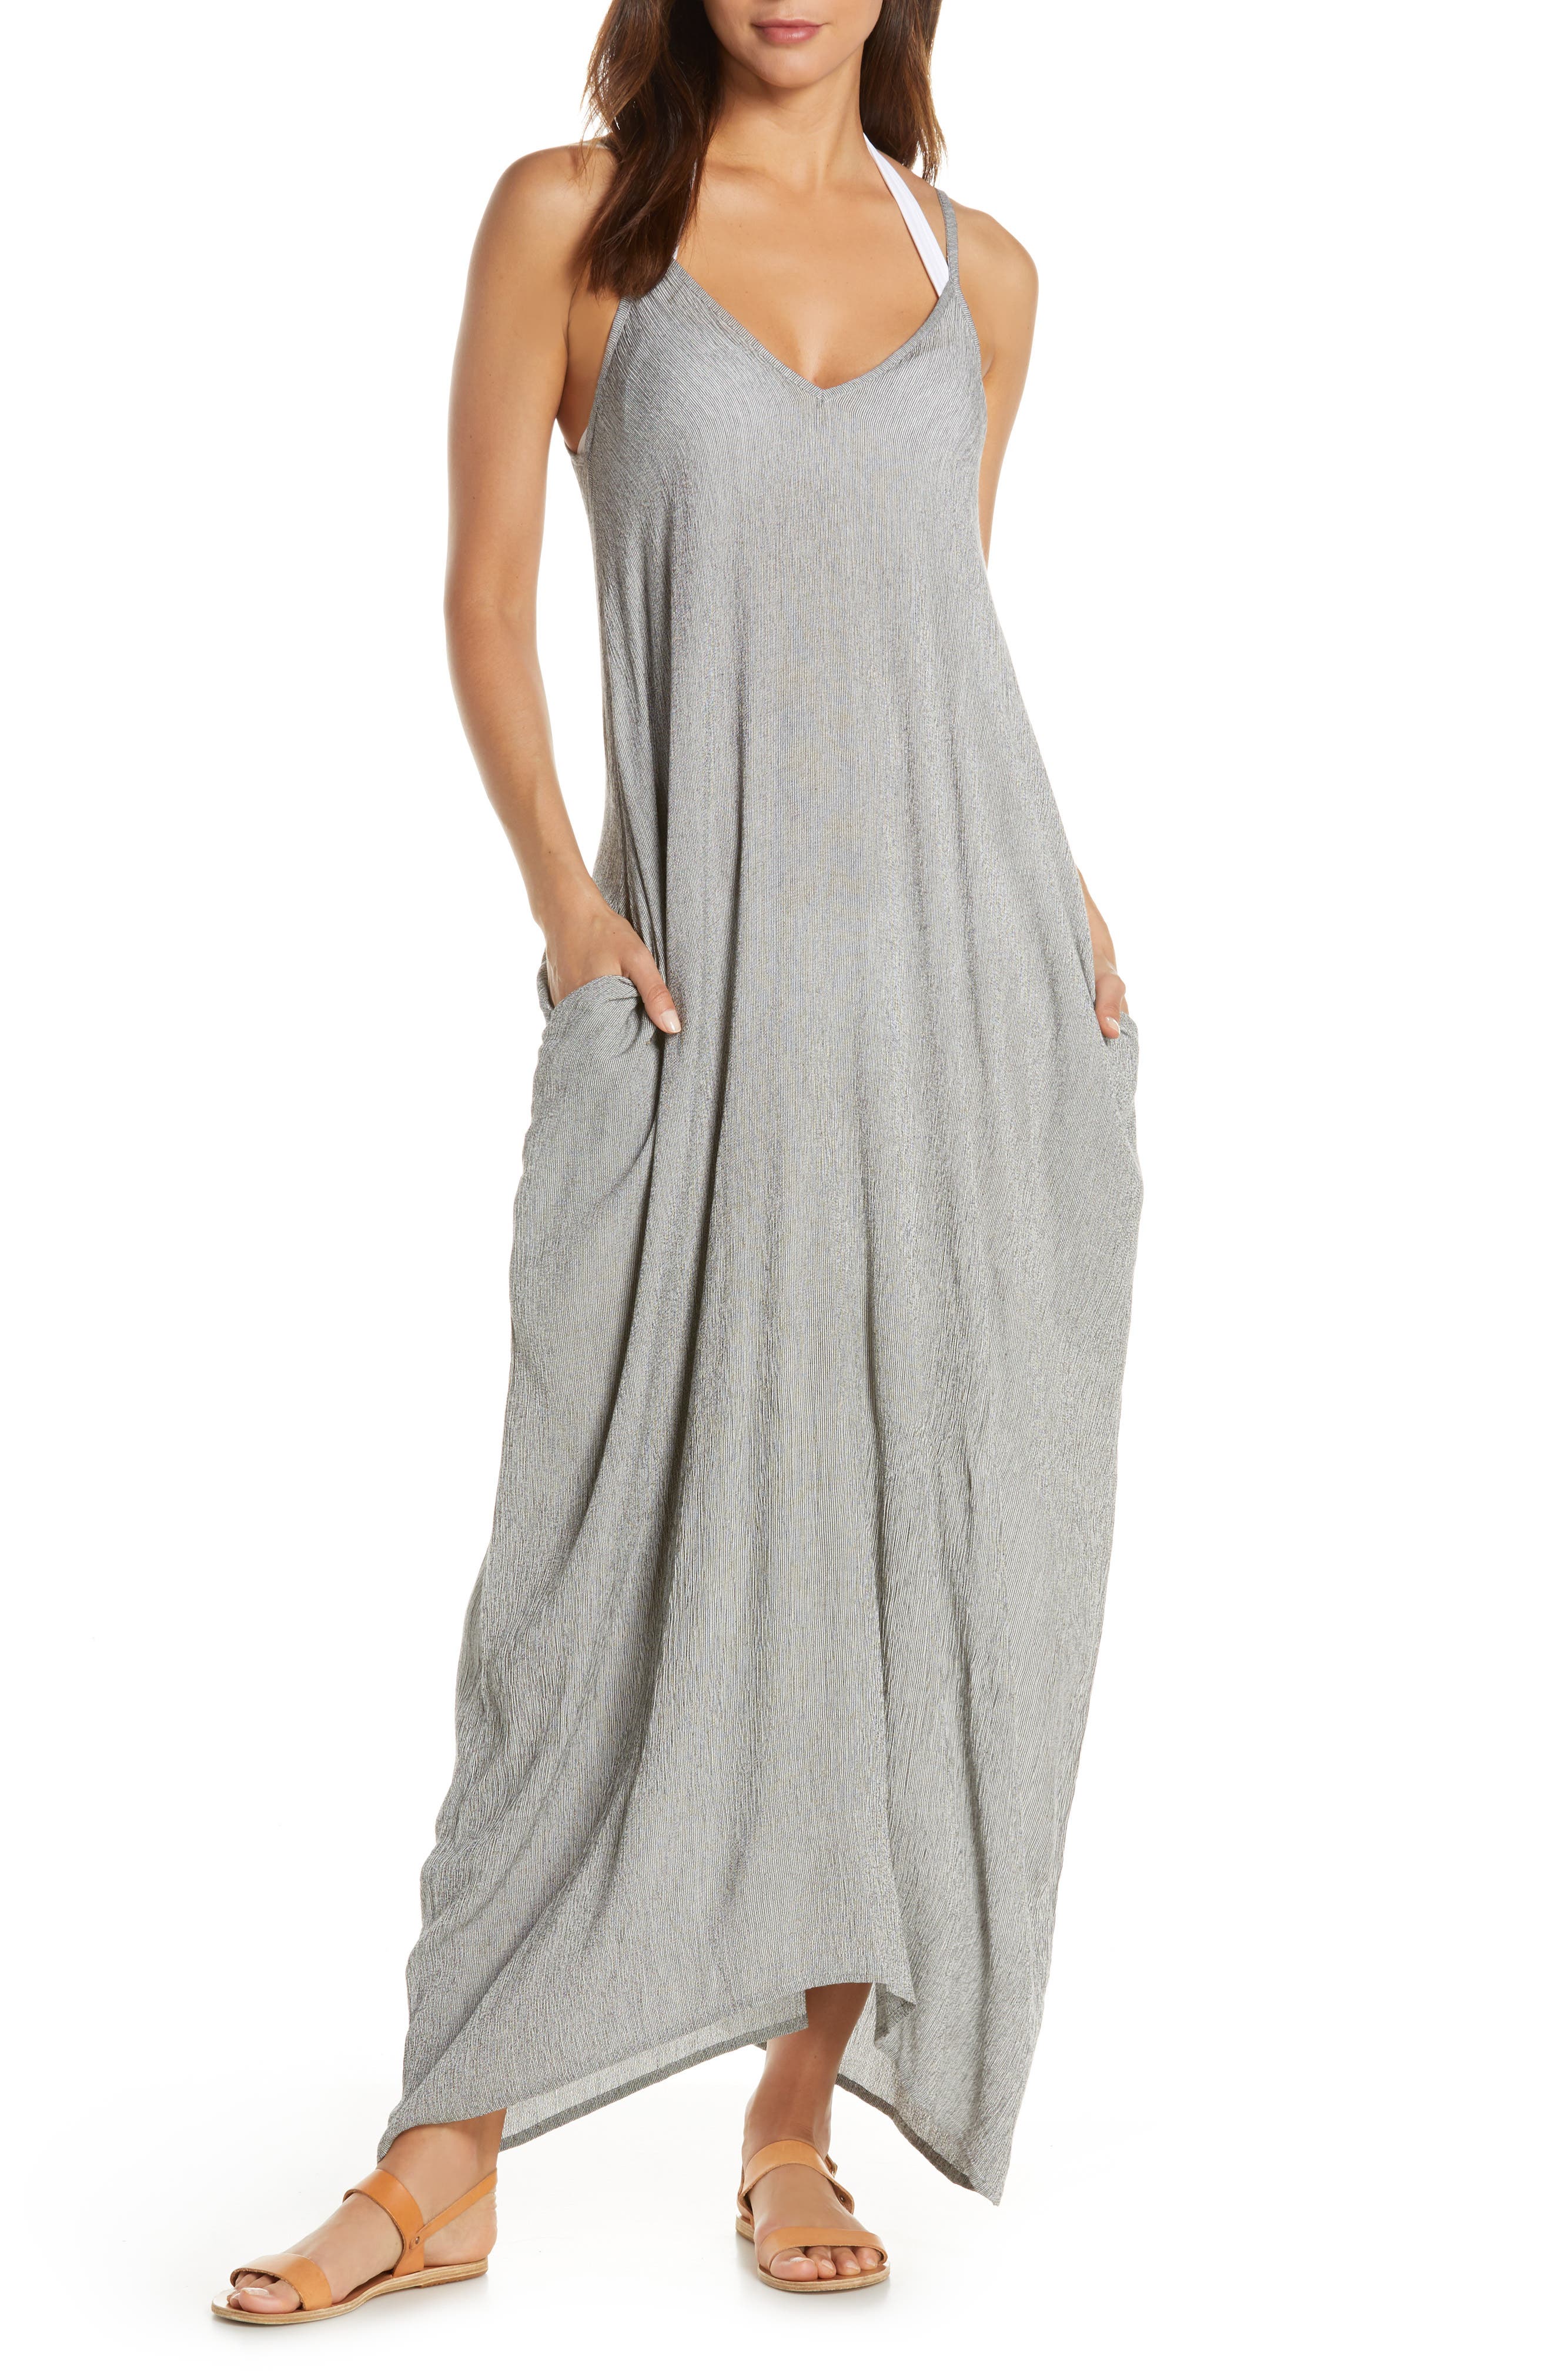 JOYFEEL Womens Cotton Linen Print A-Line Sundress Sleeveless O Neck Casual Beach Tank Dresses with Pockets